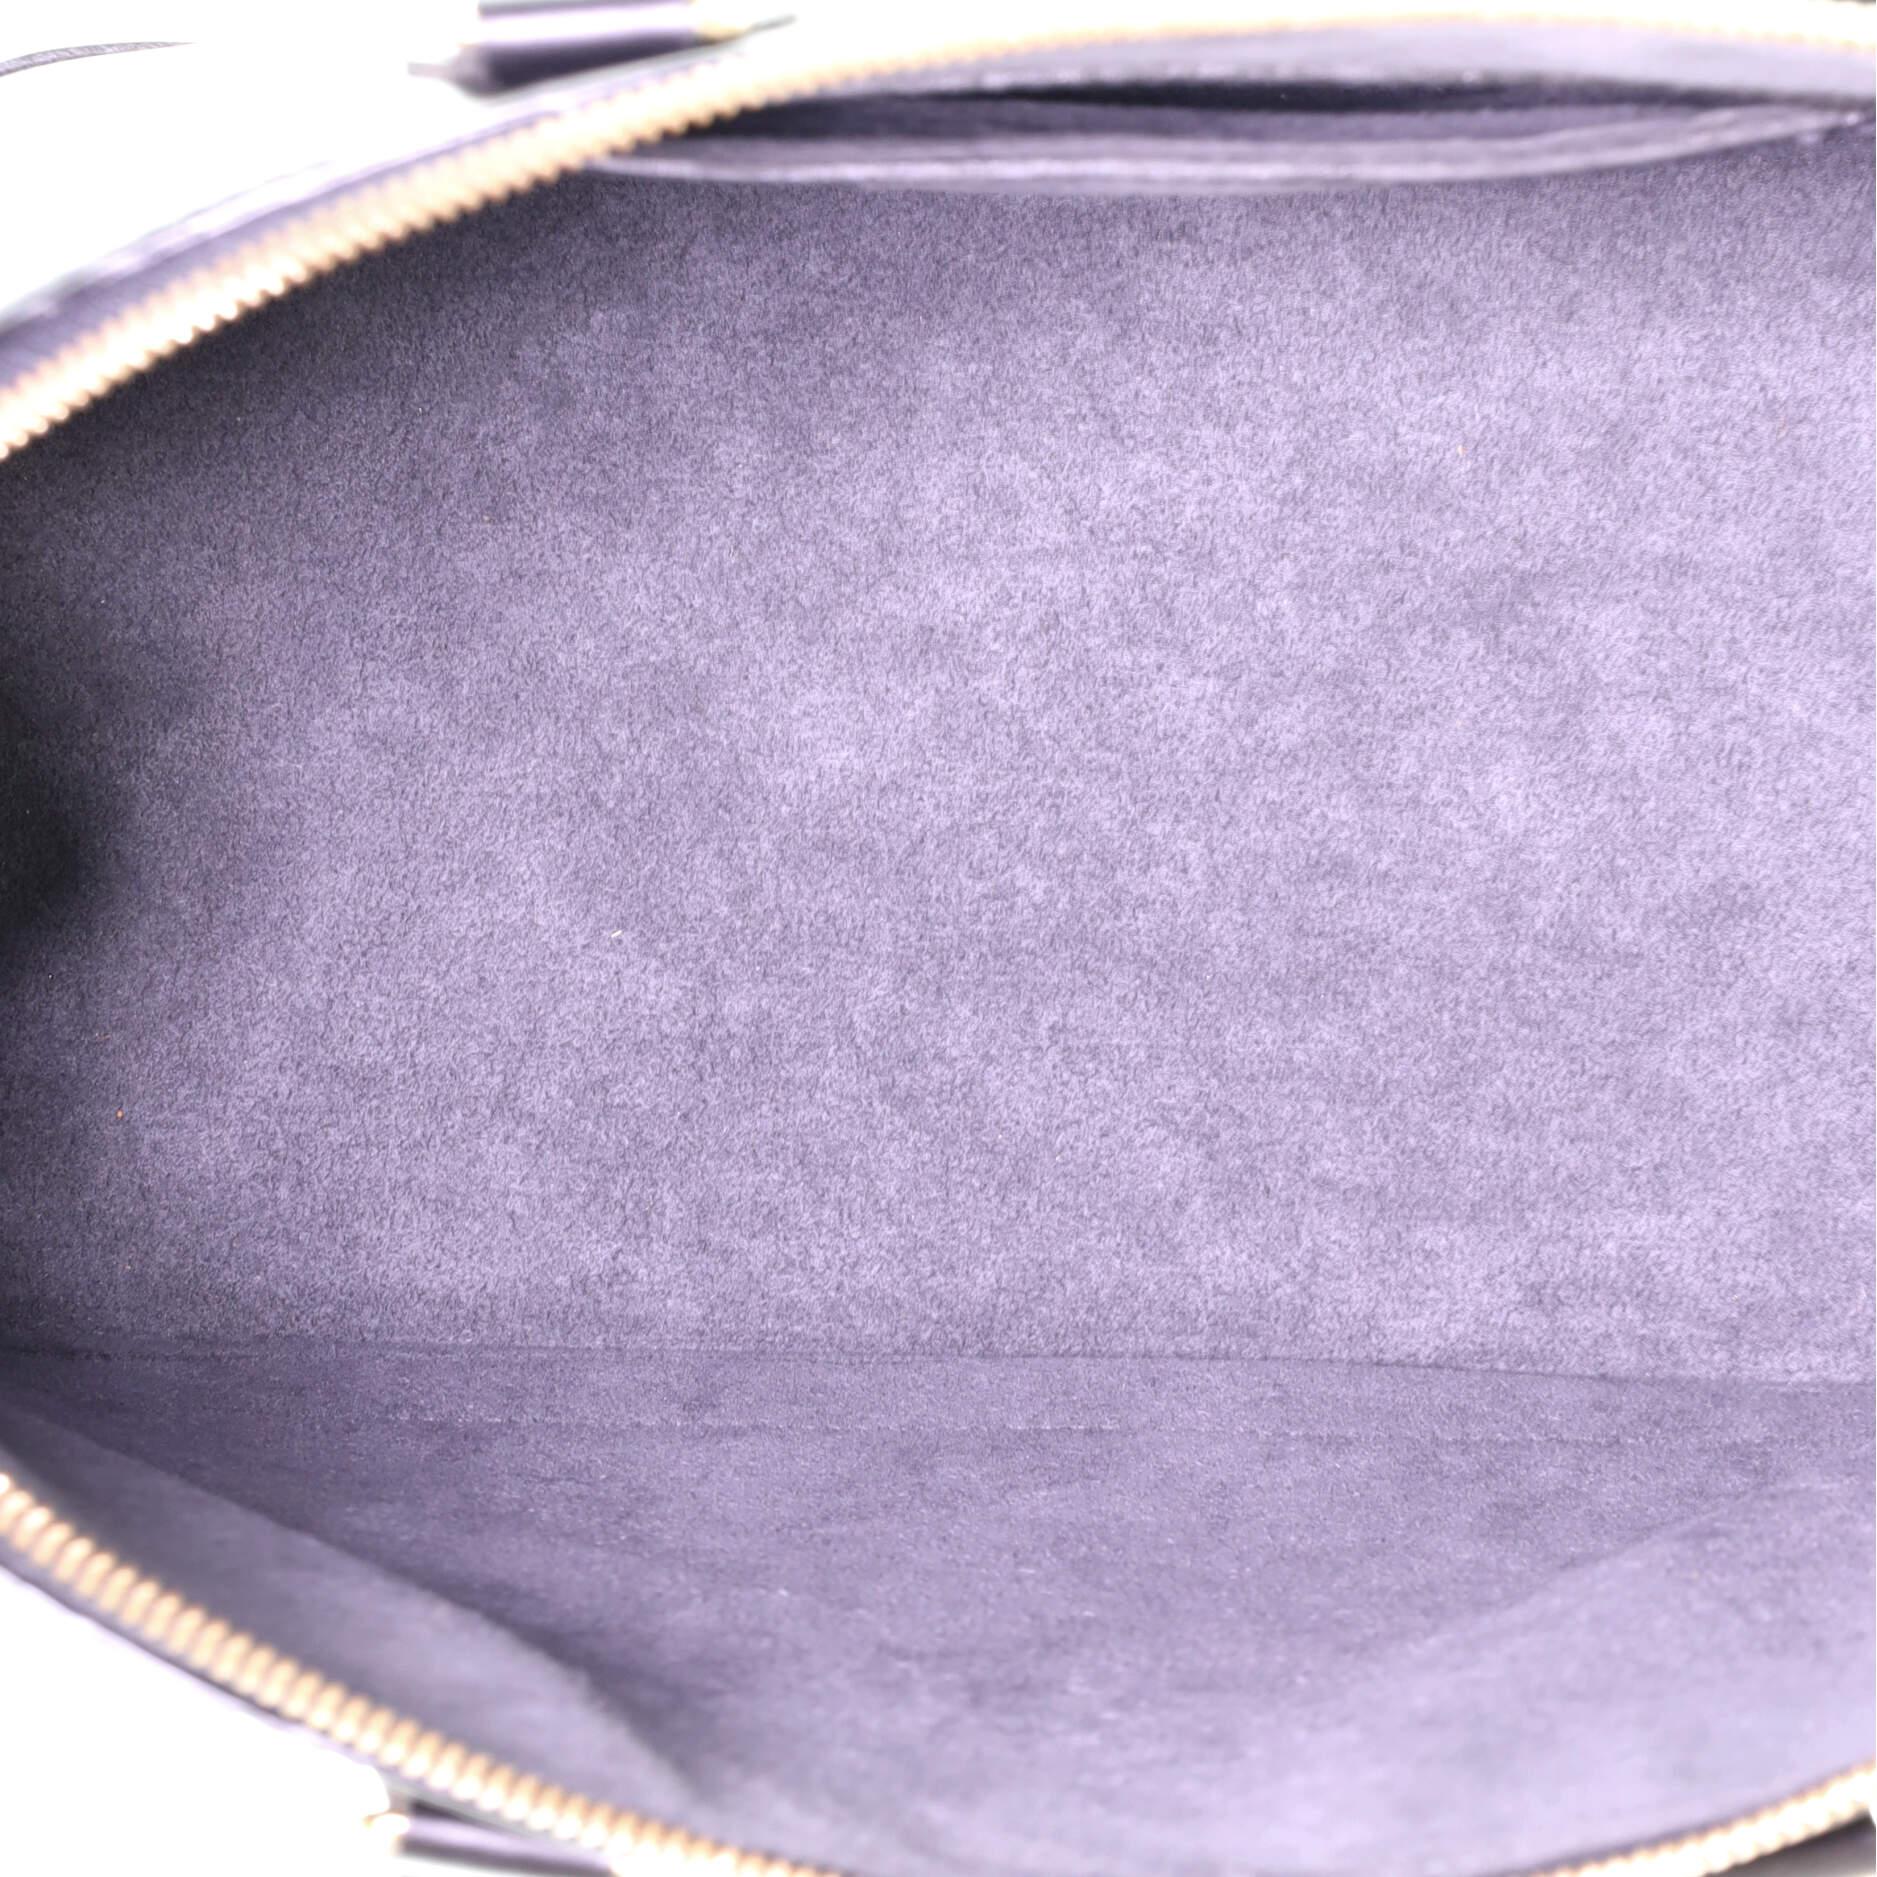 Women's or Men's Louis Vuitton Vintage Alma Handbag Epi Leather PM